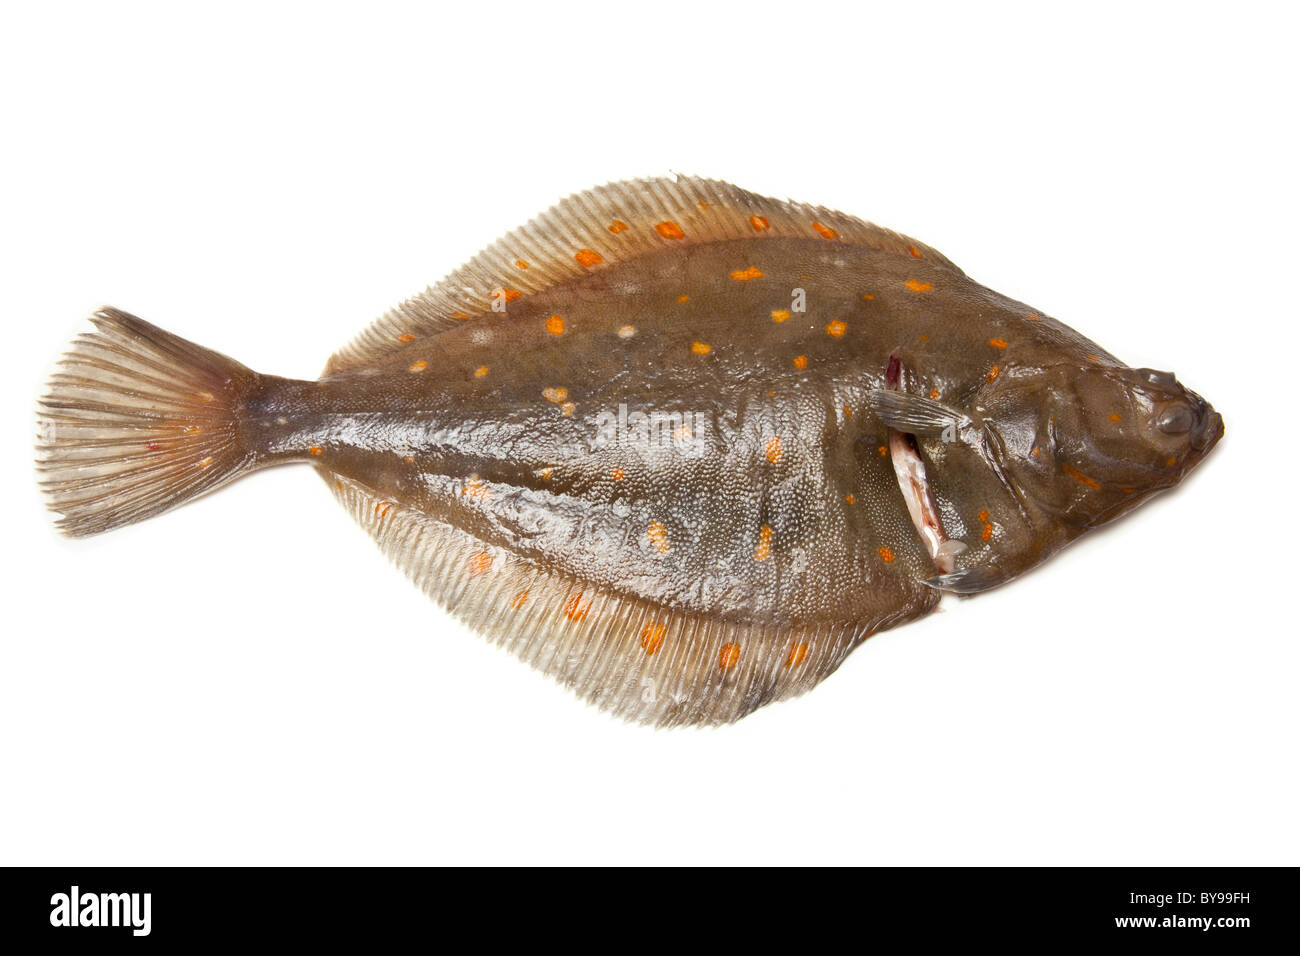 Juvenile Flatfish - Photo of the Month